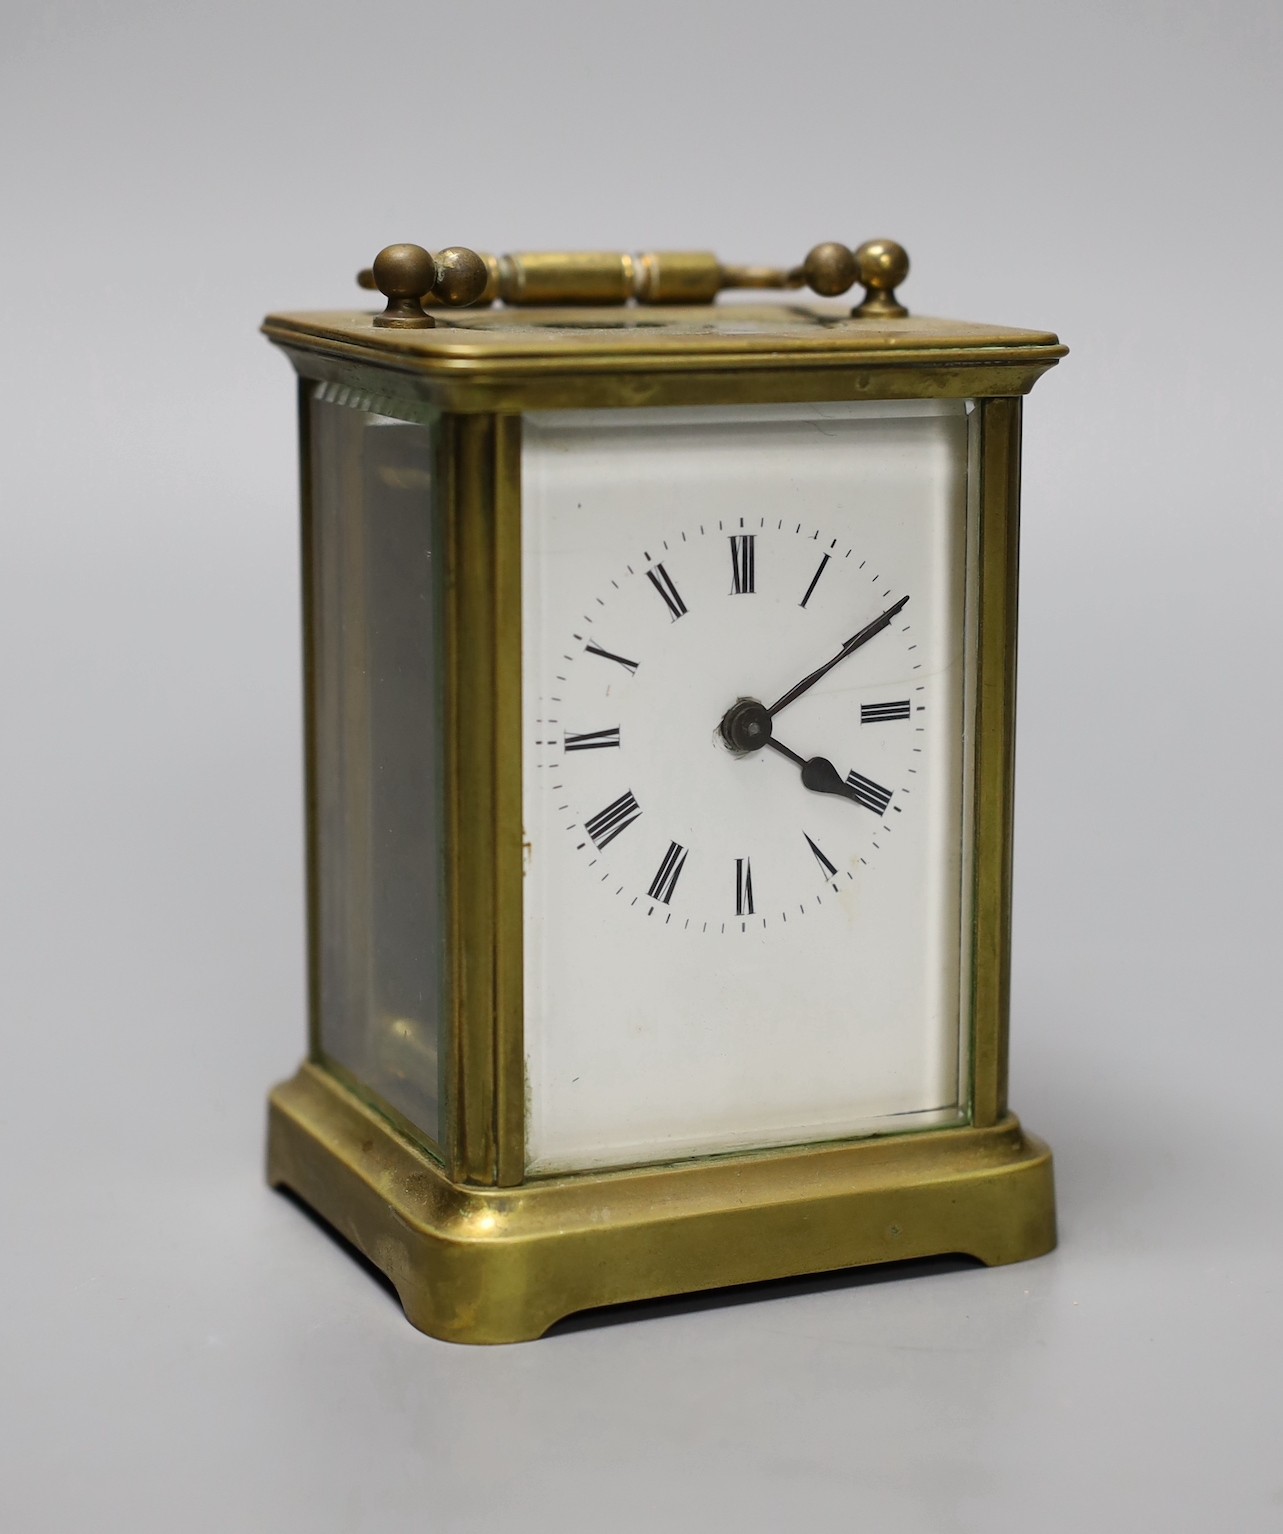 A brass carriage timepiece, 12cm